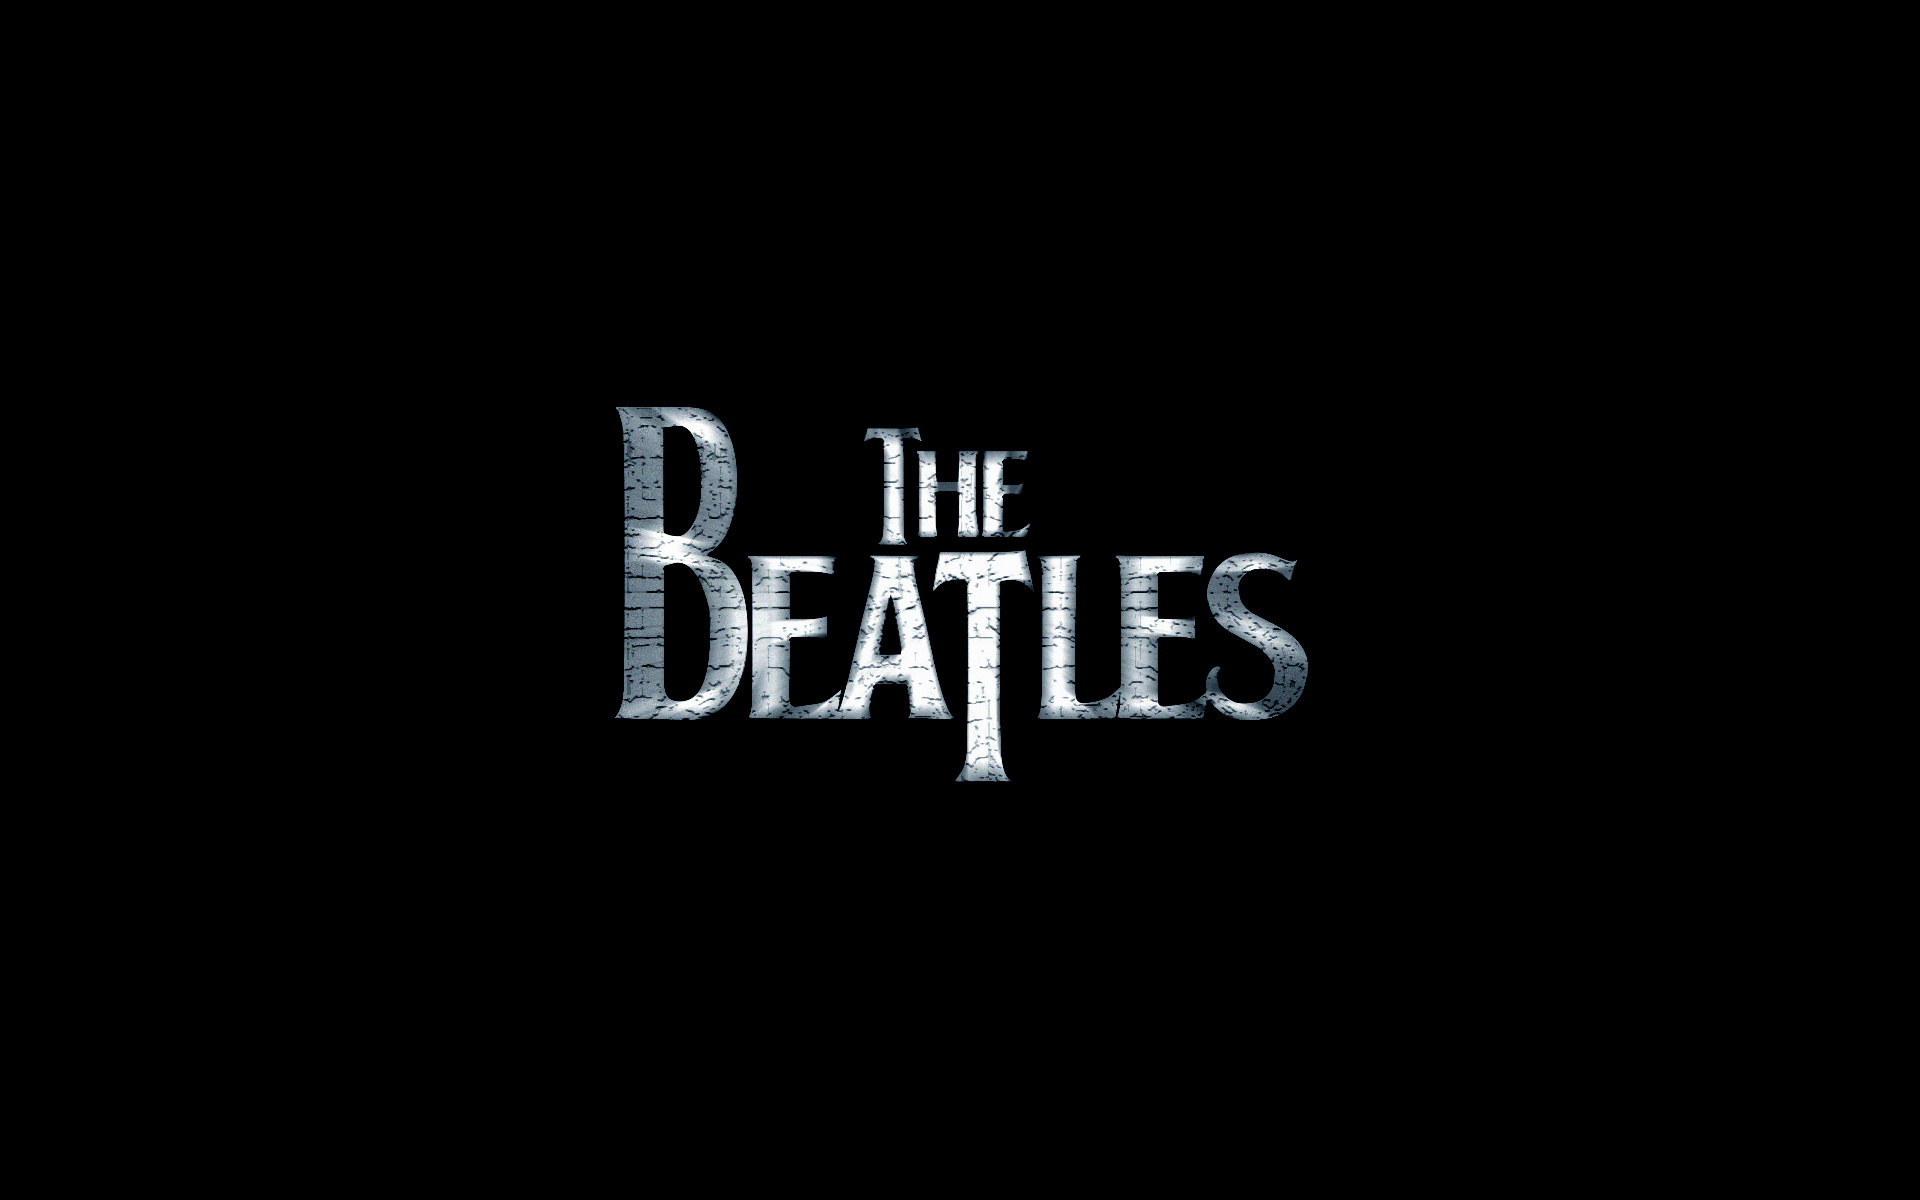 The Beatles Wallpaper Desktop Music